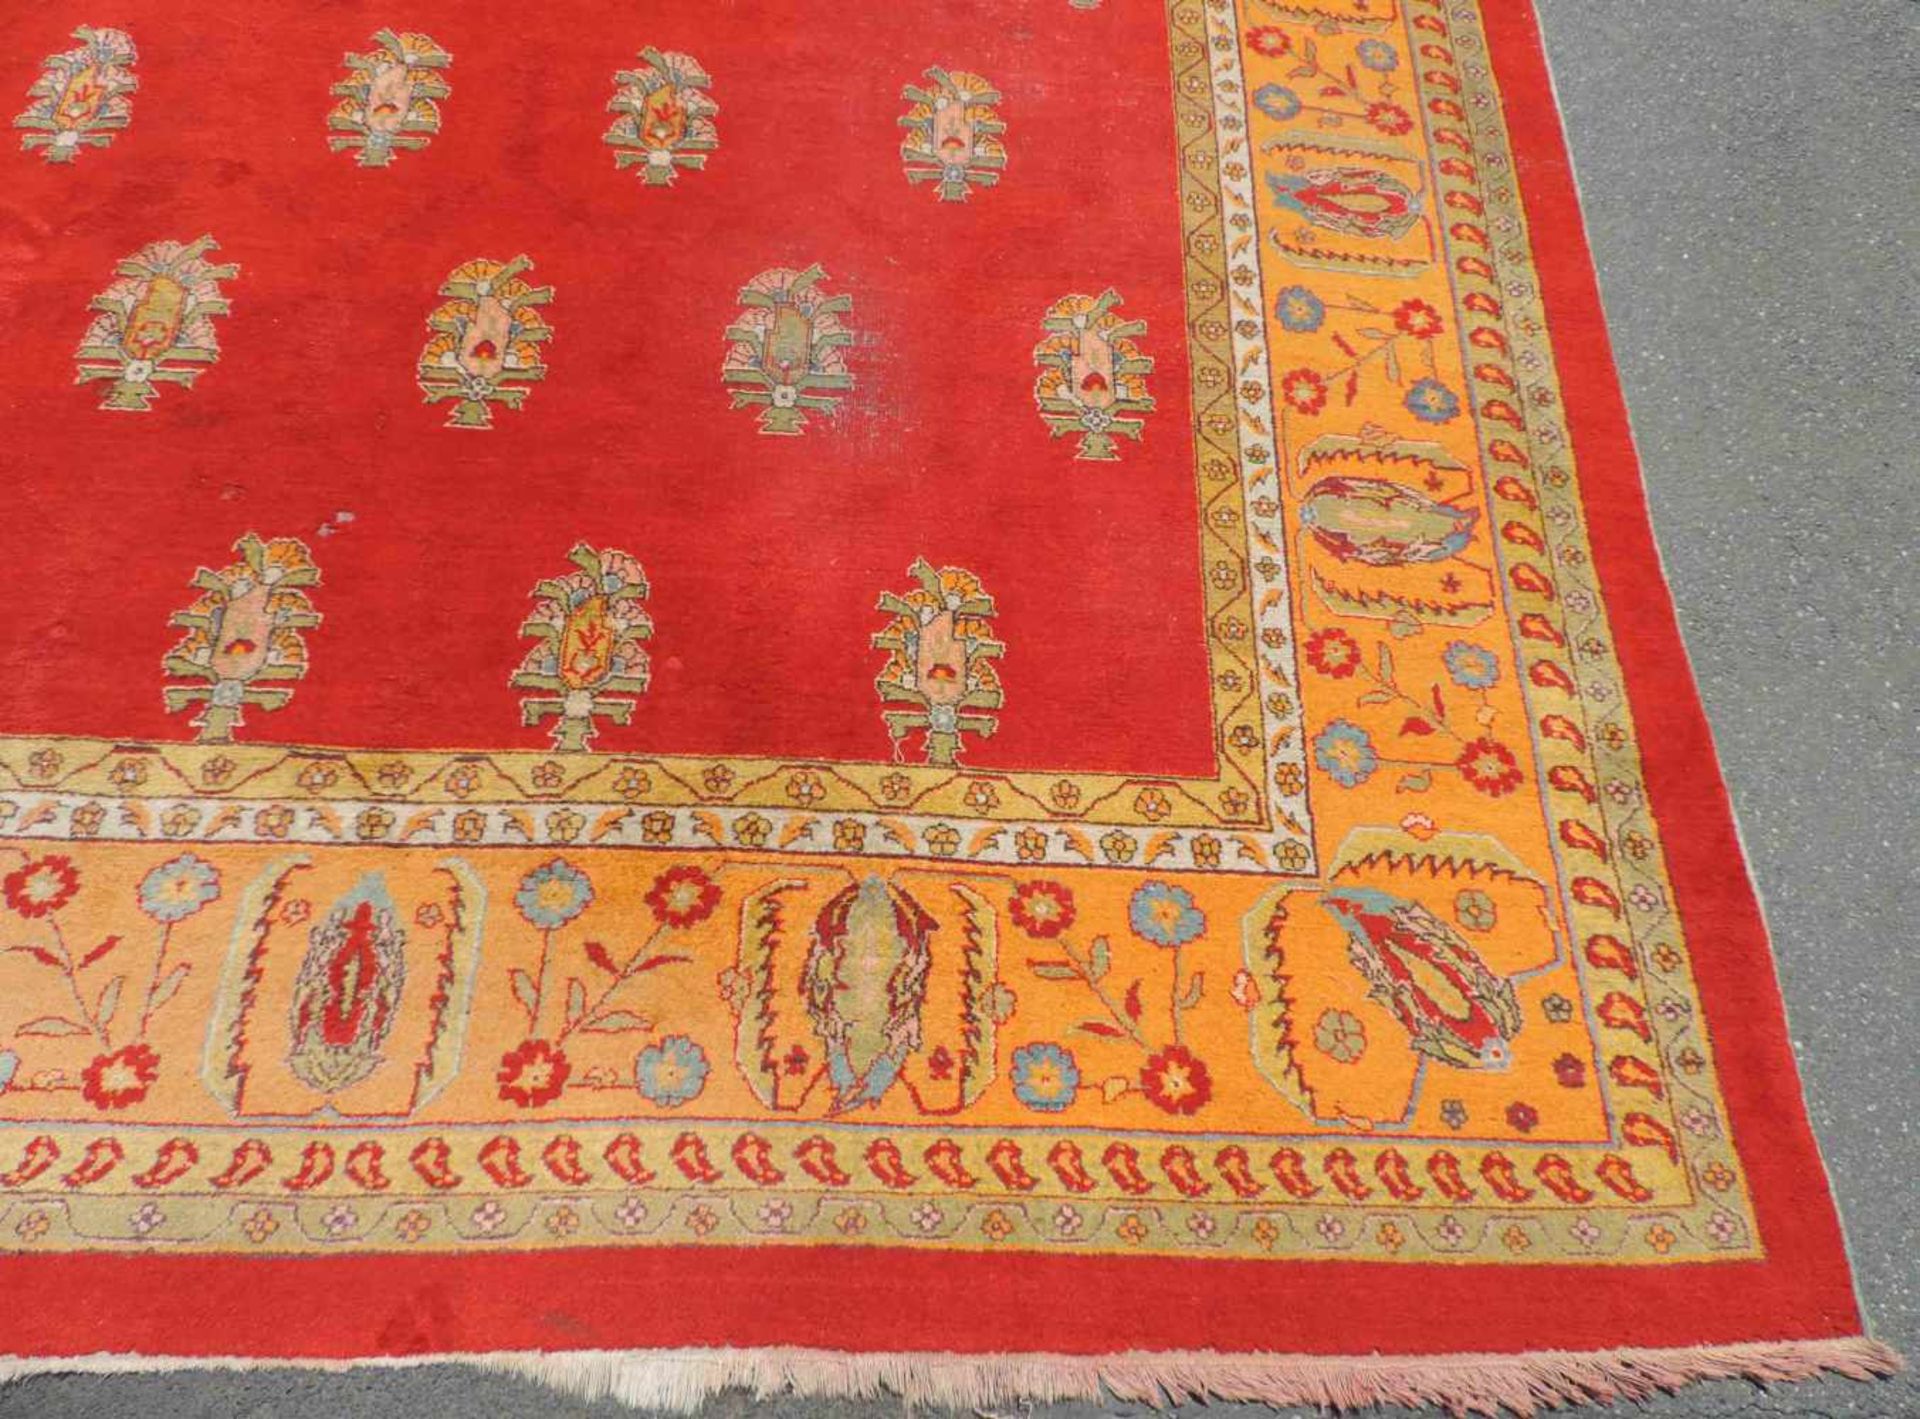 Mughal carpet. Deccani, India around 1800. - Image 4 of 10